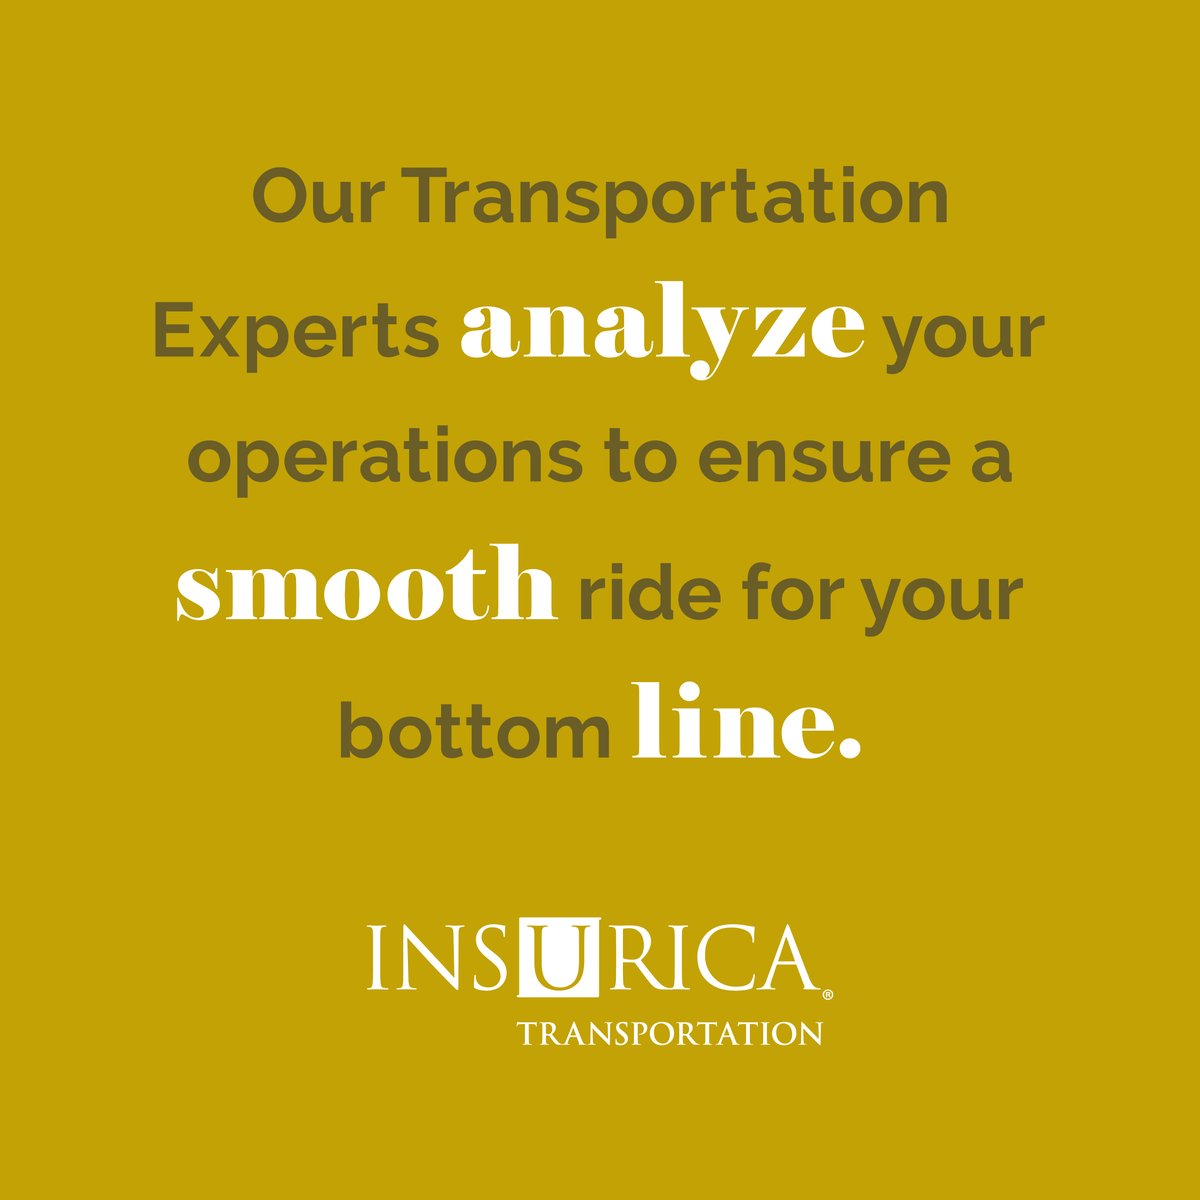 #TransportationExperts #SafetyFirst #INSURICA